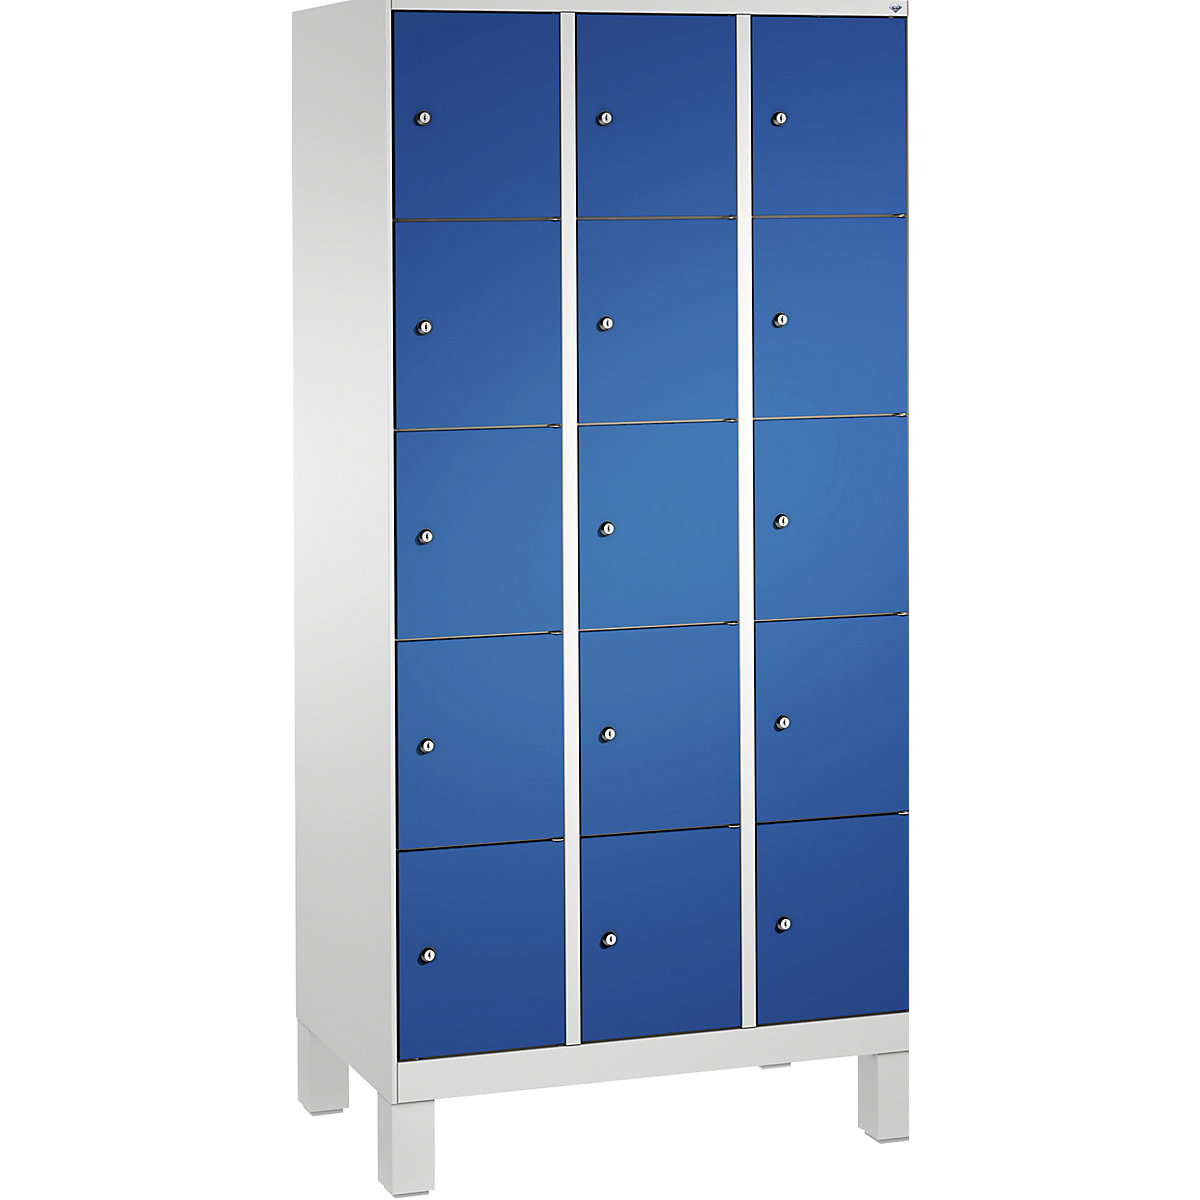 EVOLO locker unit, with feet – C+P, 3 compartments, 5 shelf compartments each, compartment width 300 mm, light grey / gentian blue-3